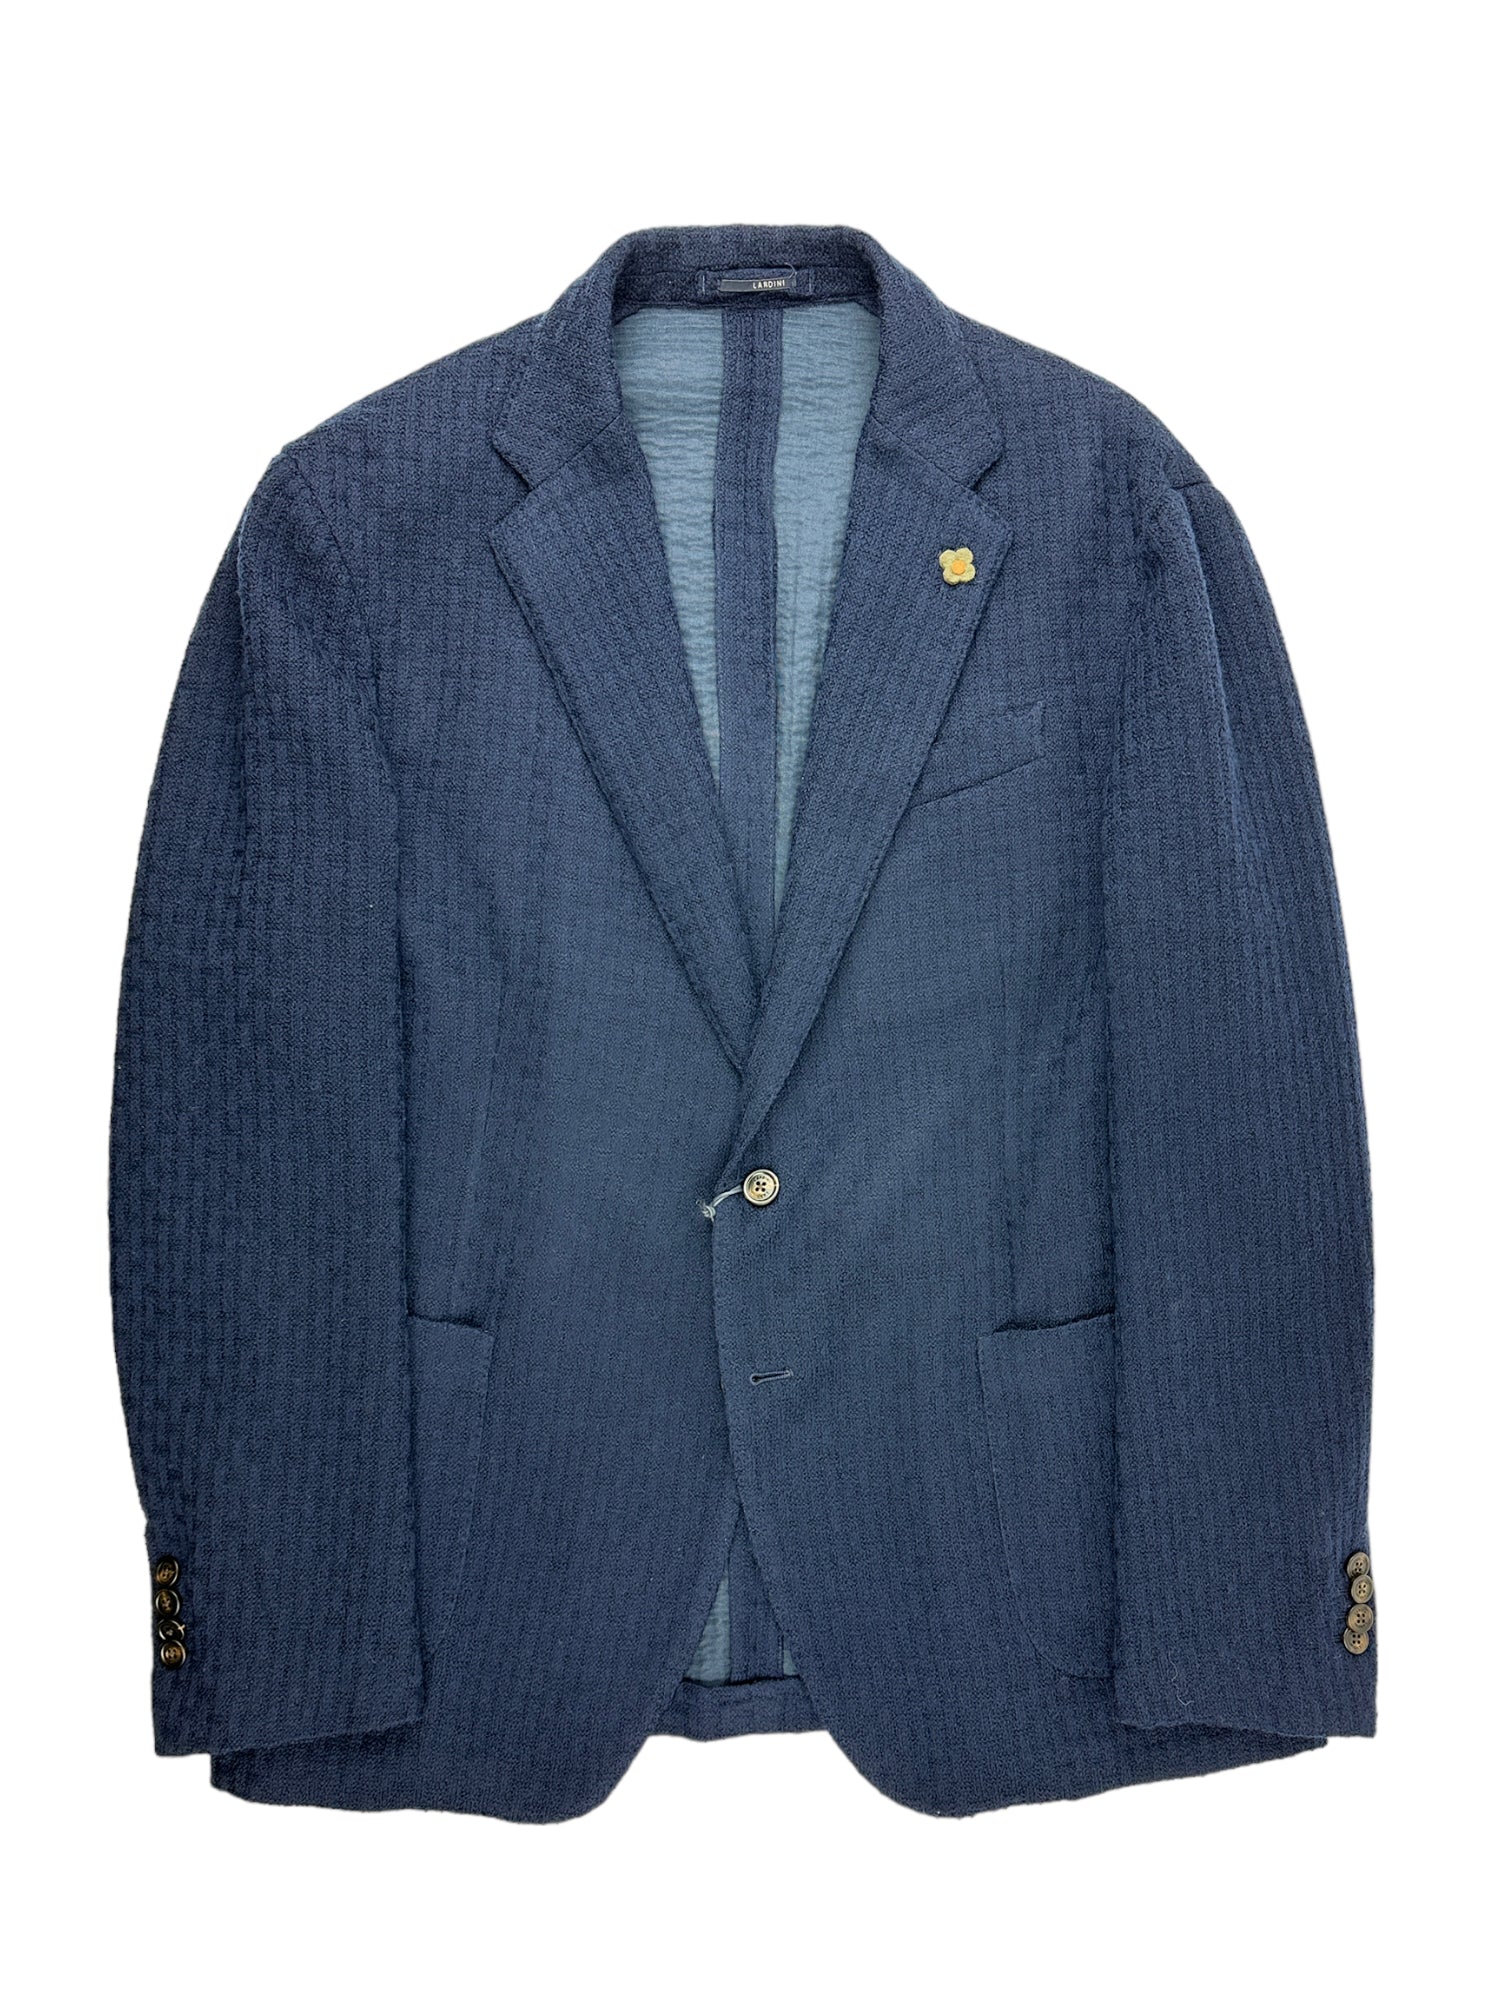 Lardini Navy Liknit Knitted Jacket